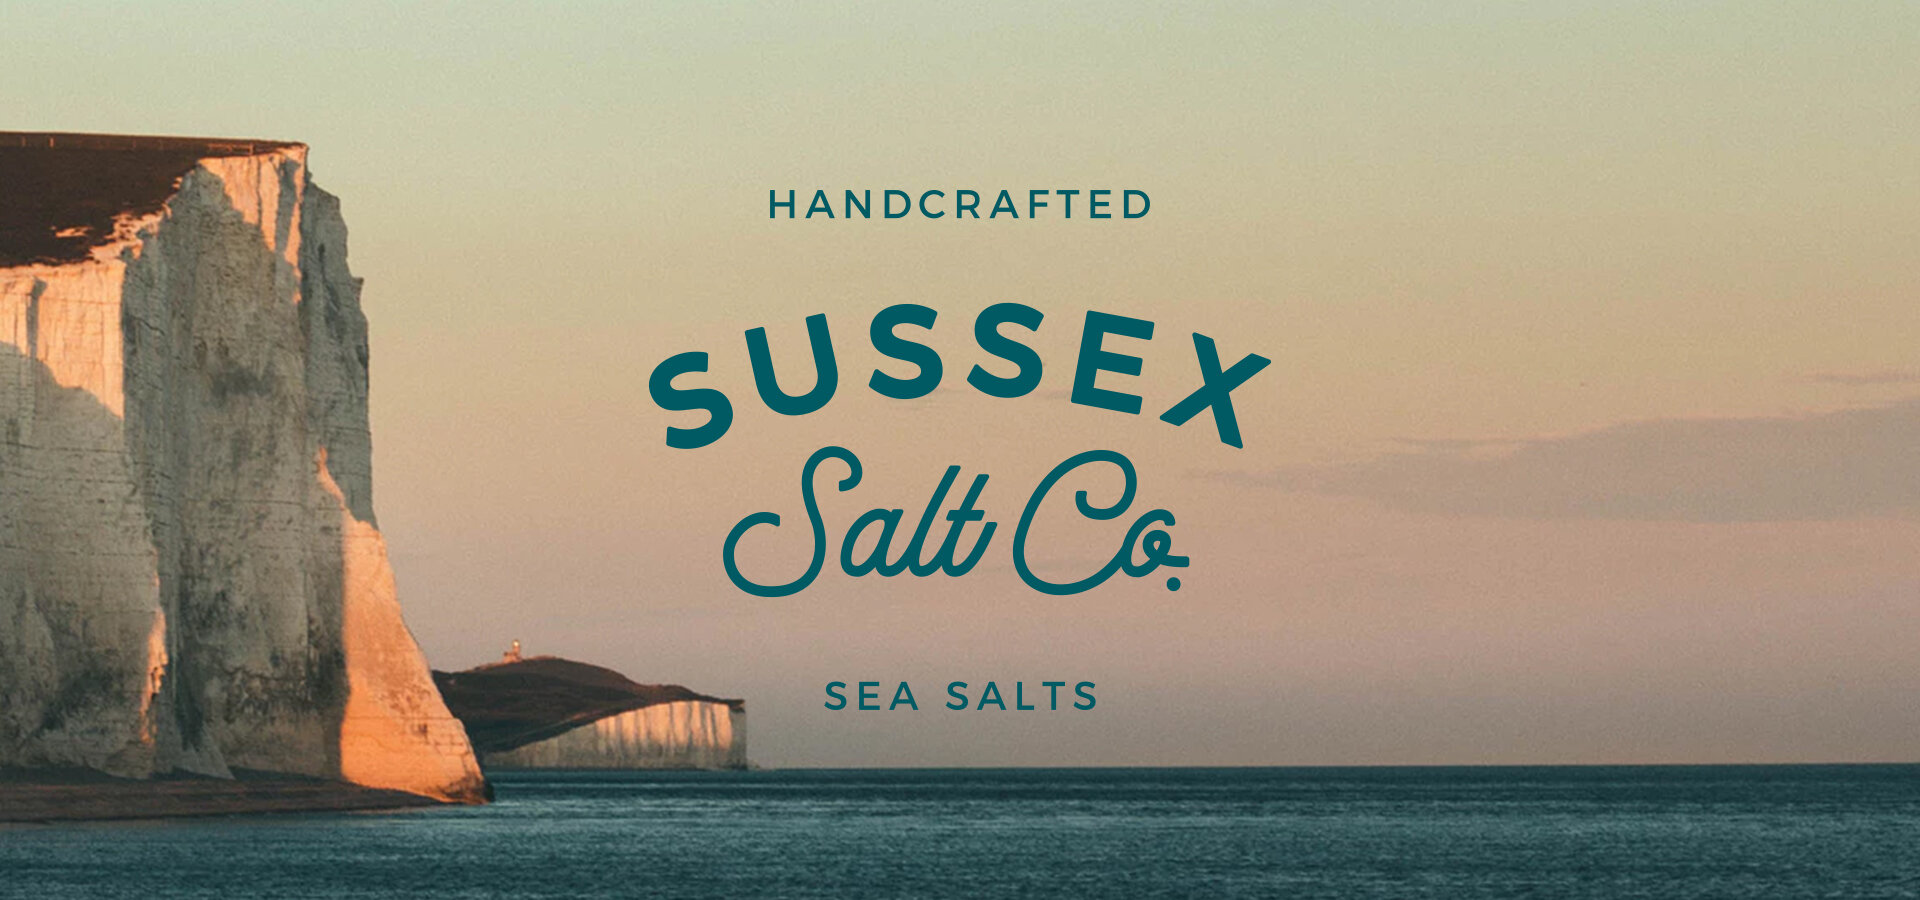 Sussex_Salt_Co_Alt_2.1.jpg